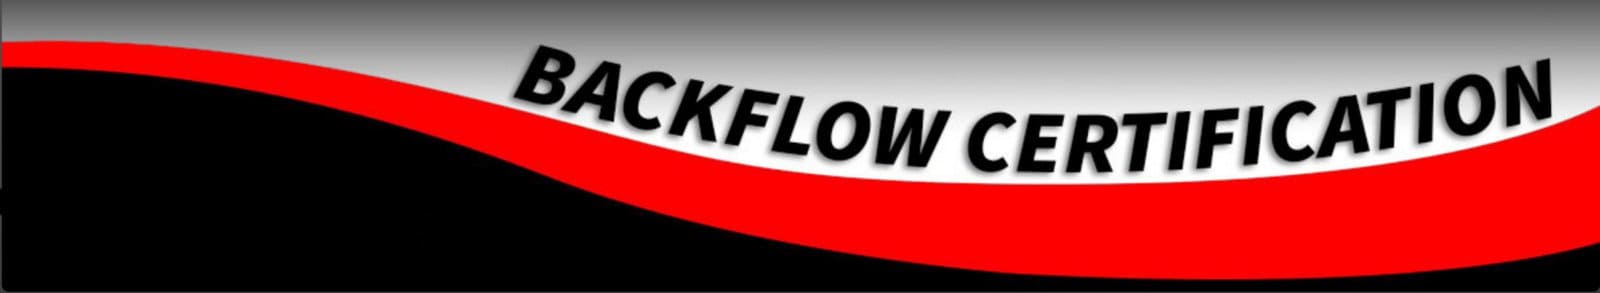 Backflow Certification Broward County